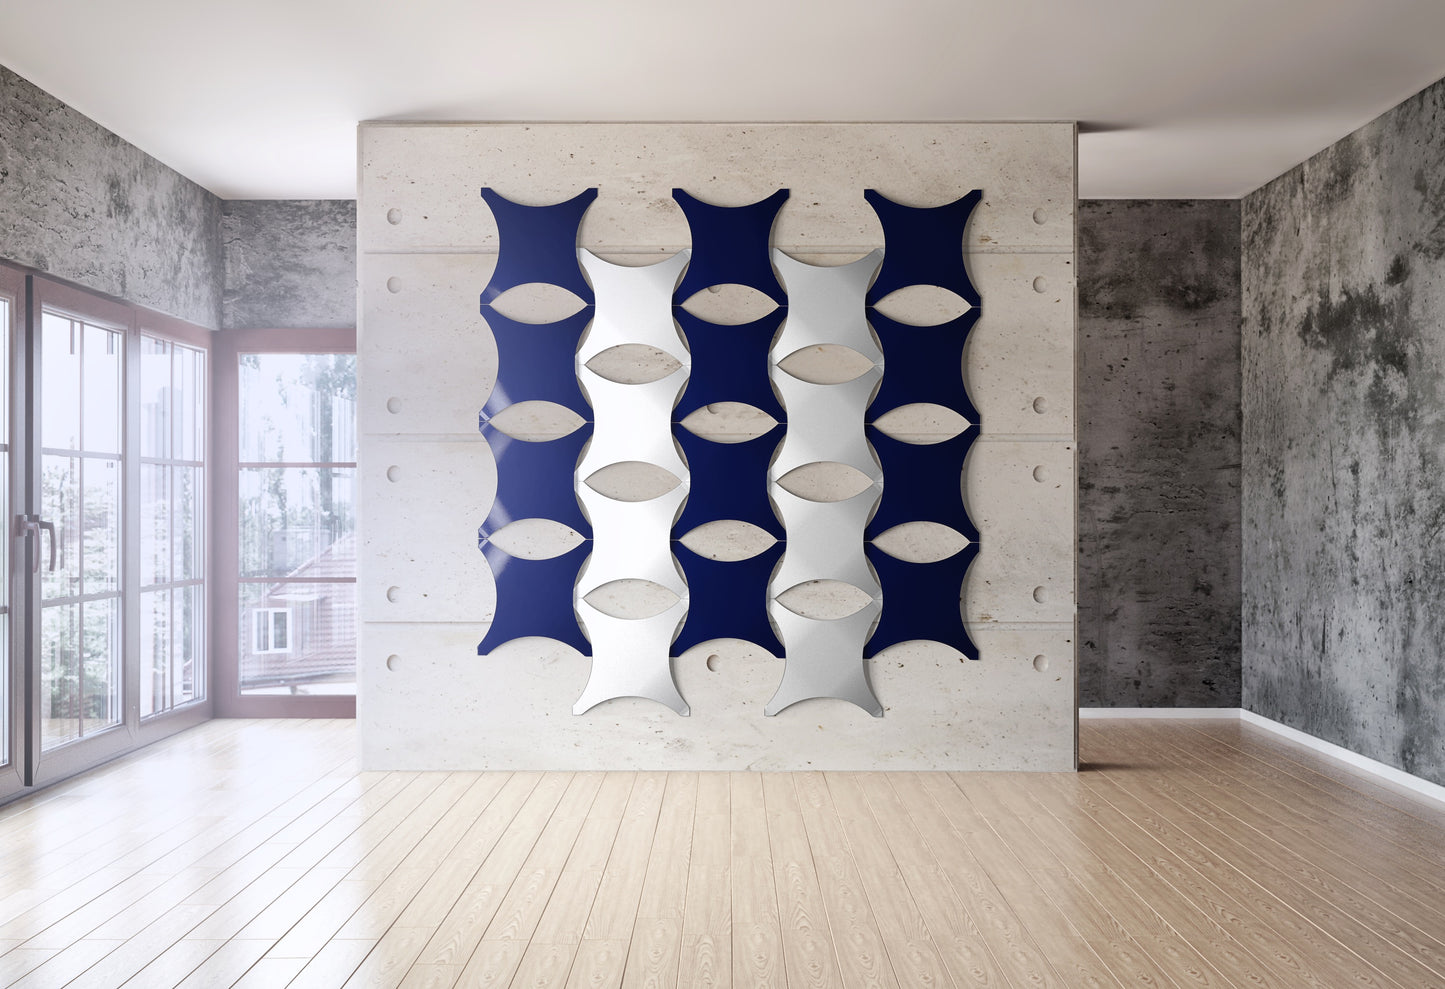 Decorative 3D Wall Covering Panels. 6 Pieces. Peel & Stick. Metallic Finish. DIY.